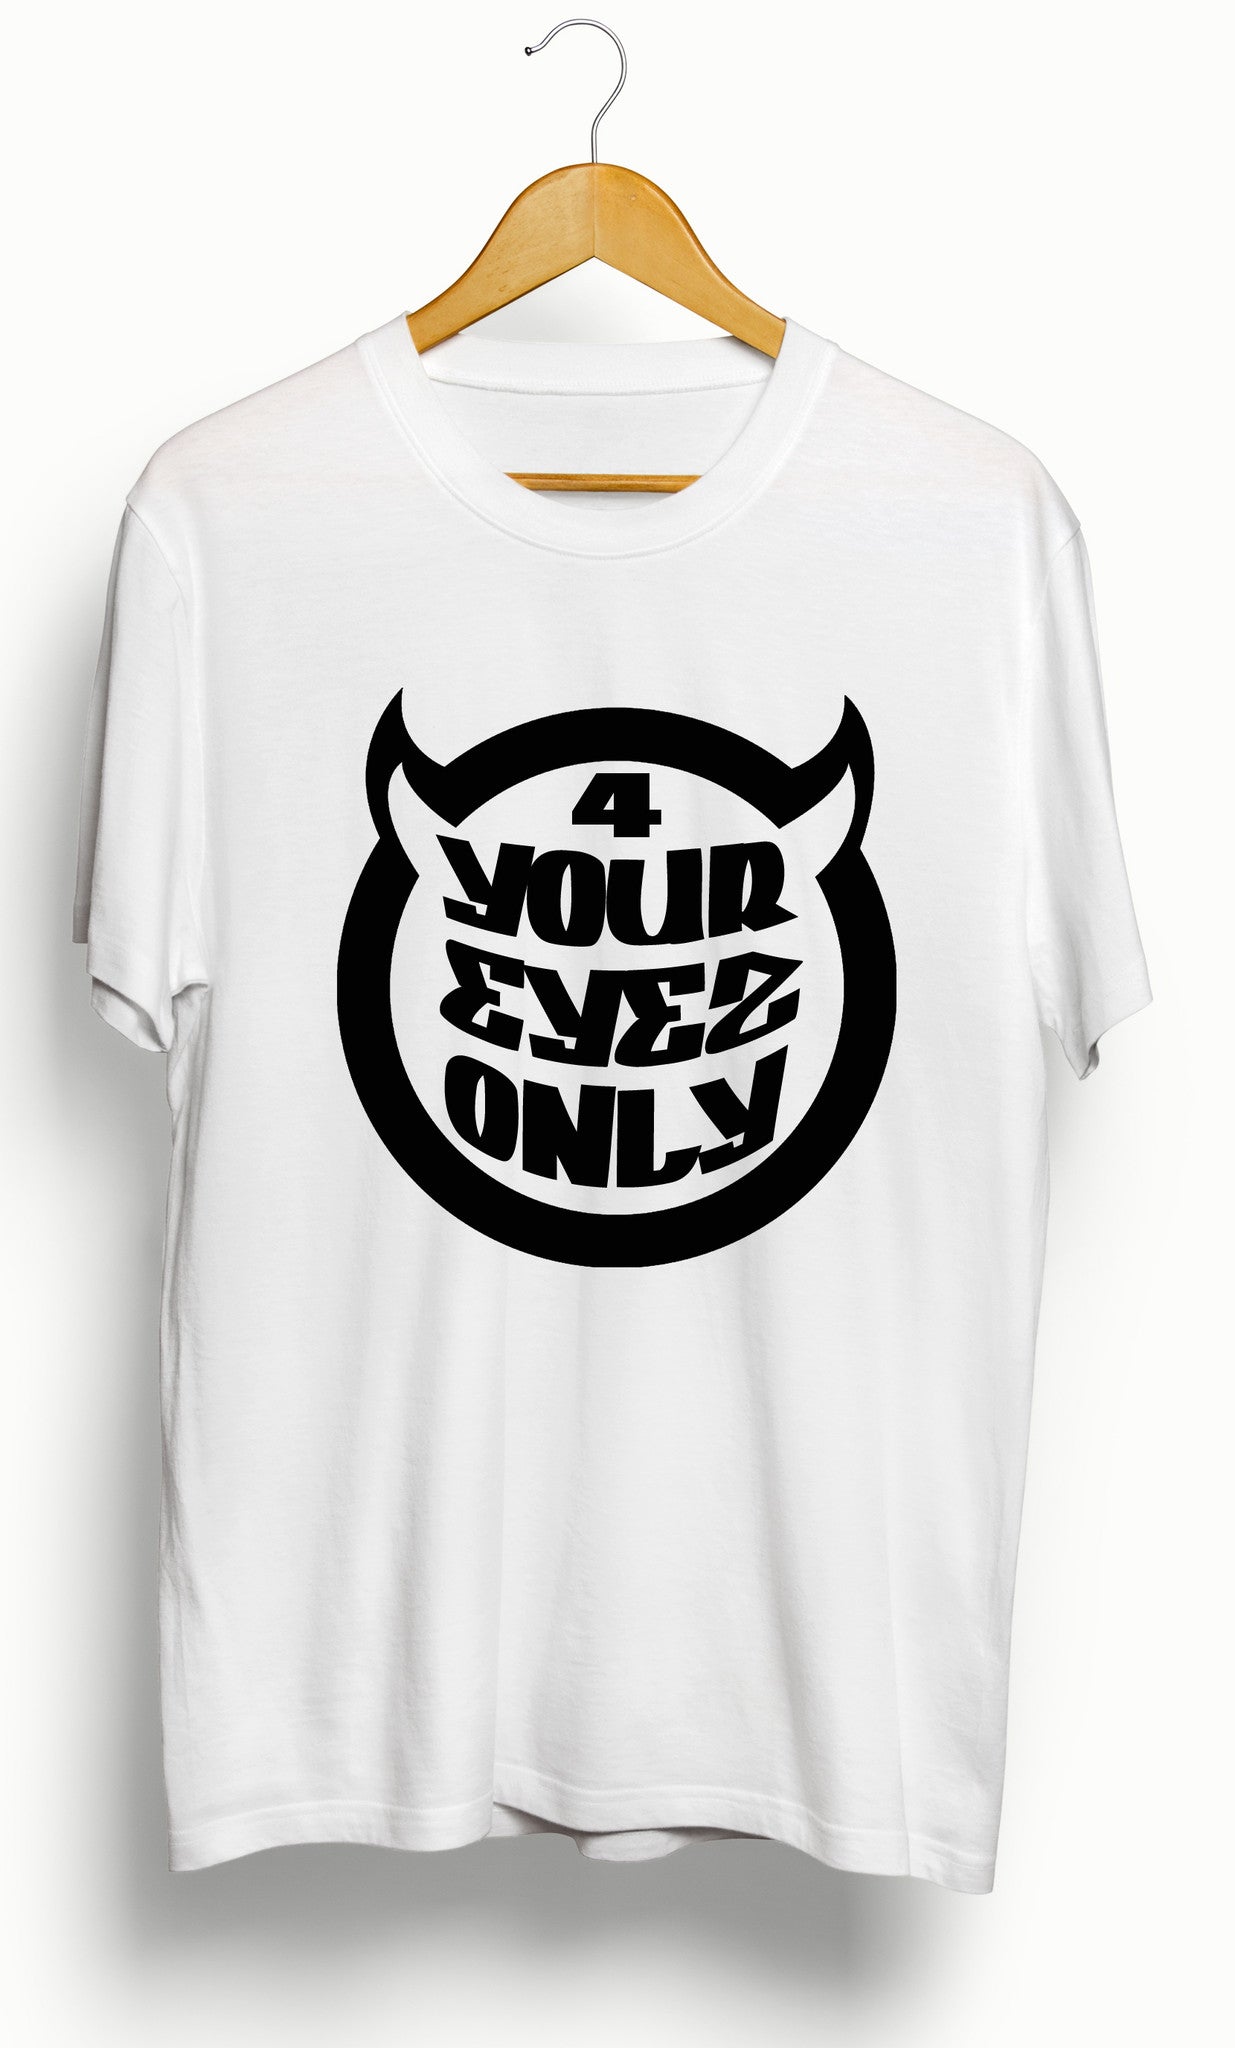 J Cole "4 Your Eyez Only" Album T-Shirt - Ourt